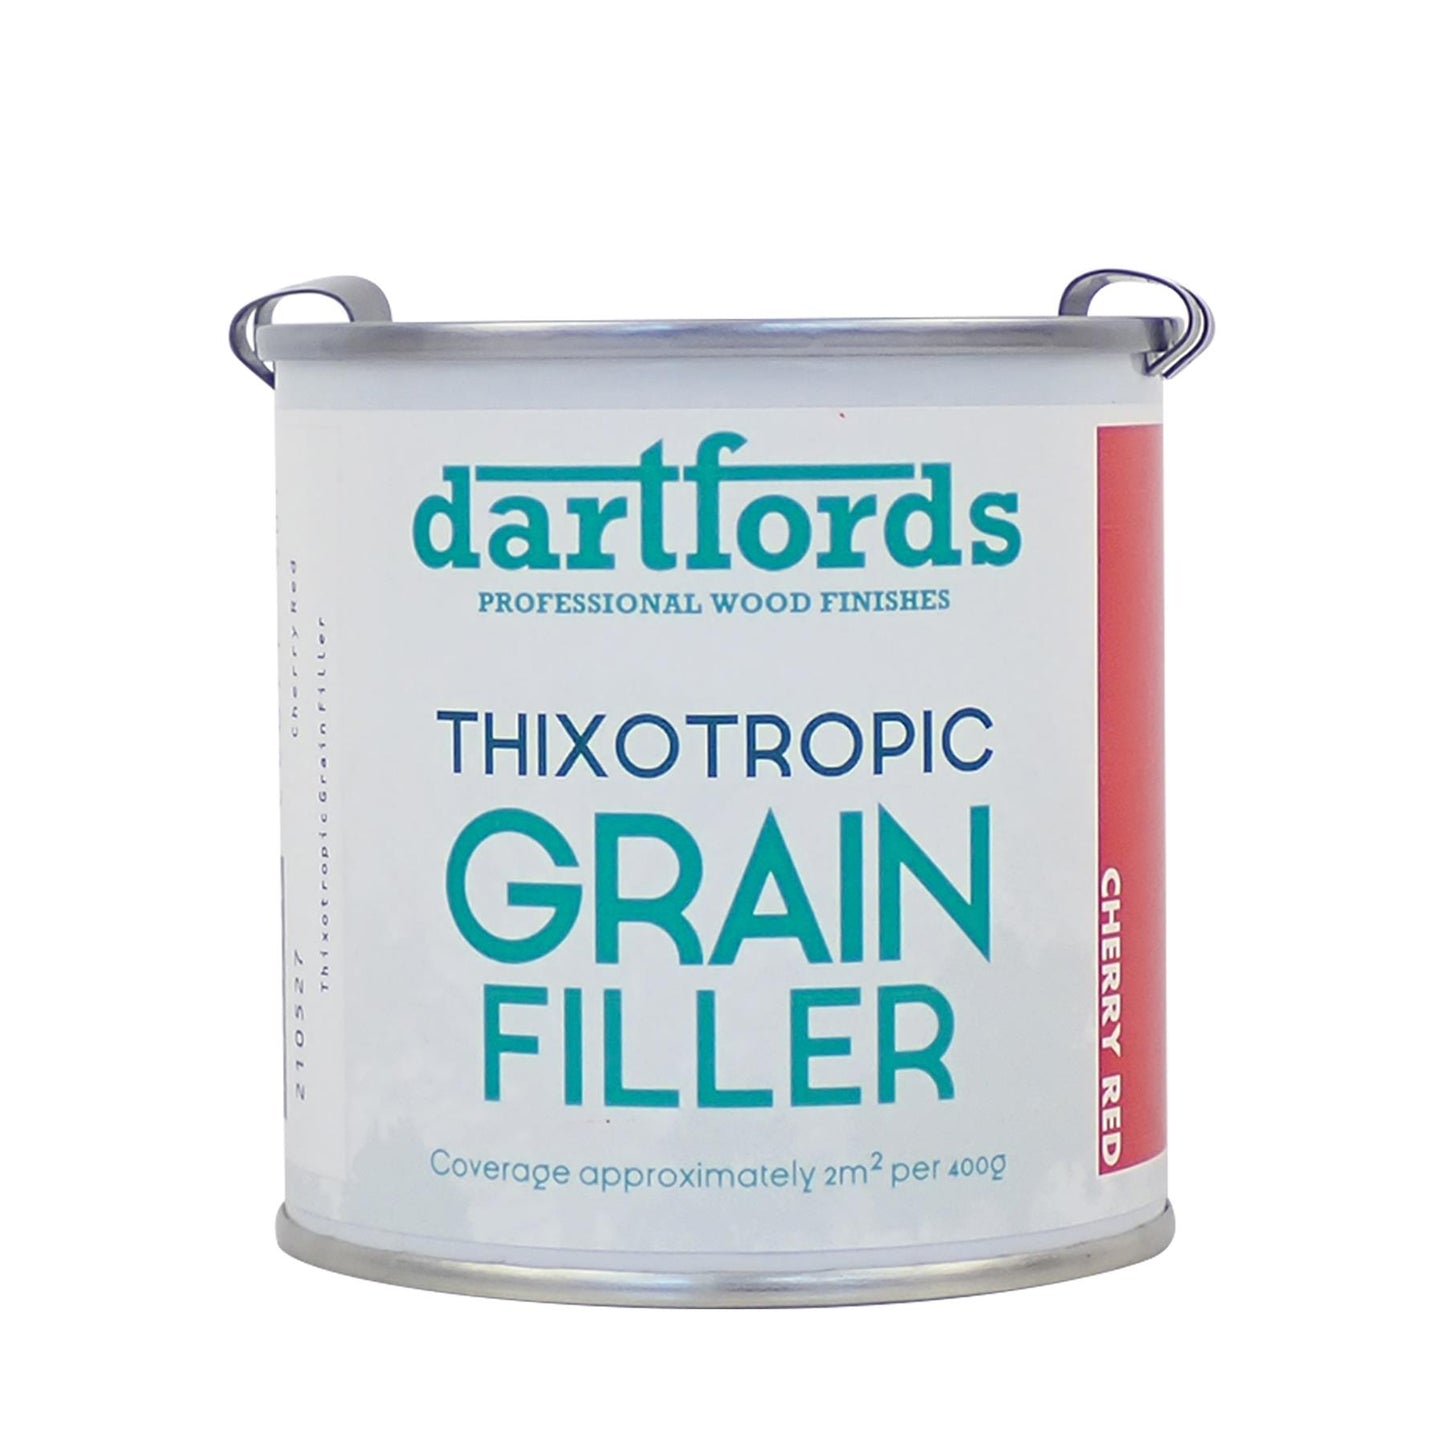 dartfords Cherry Red Thixotropic Grain Filler - 400g Tin